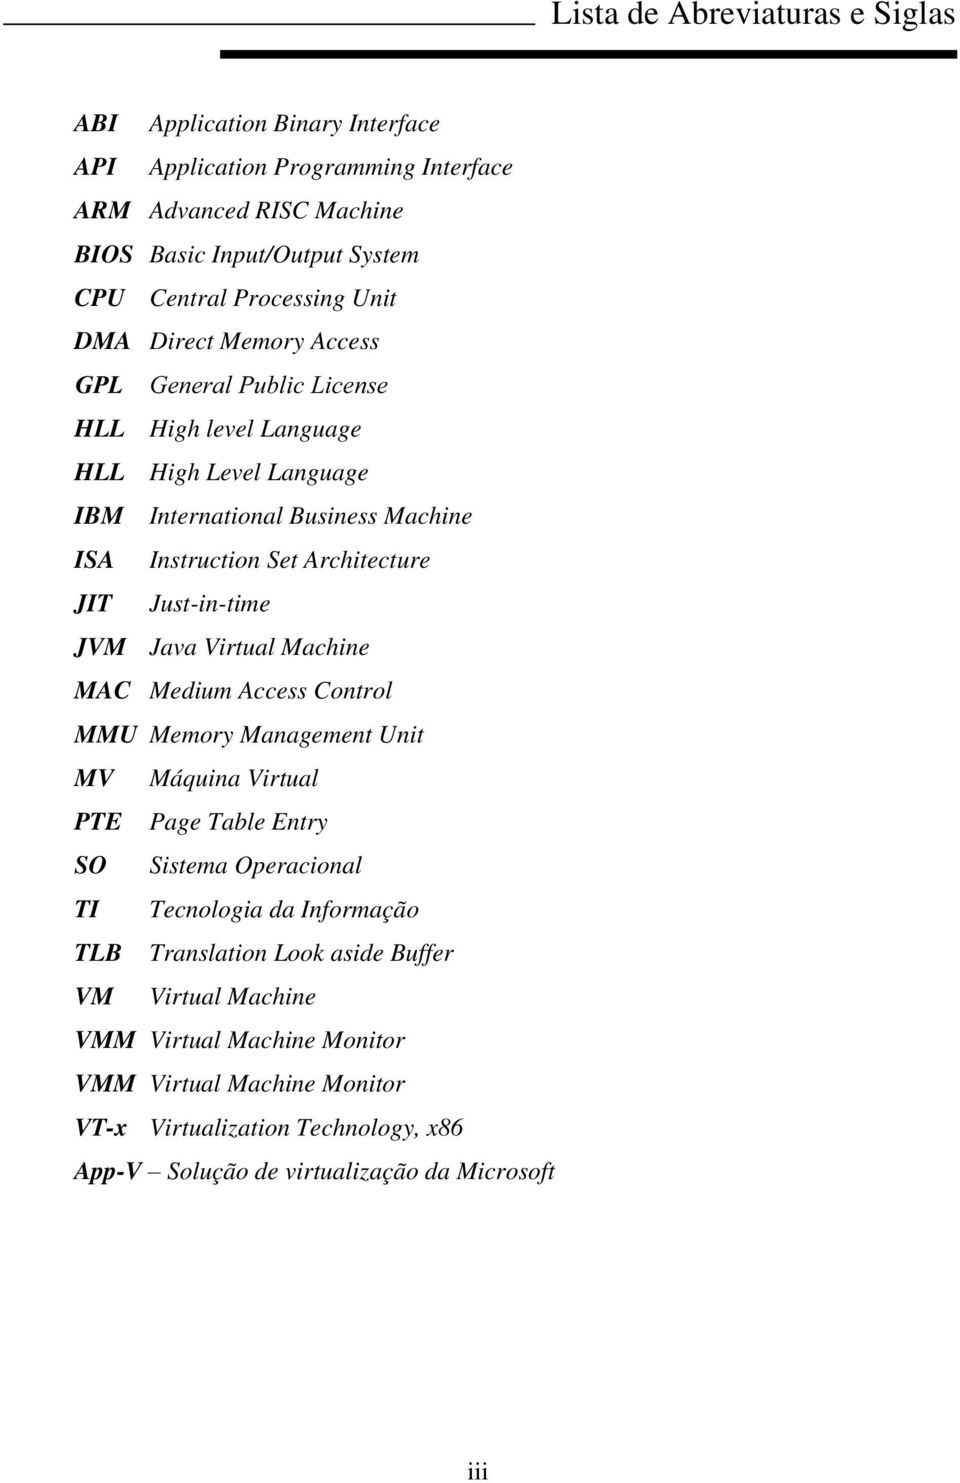 Just-in-time JVM Java Virtual Machine MAC Medium Access Control MMU Memory Management Unit MV Máquina Virtual PTE Page Table Entry SO Sistema Operacional TI Tecnologia da Informação